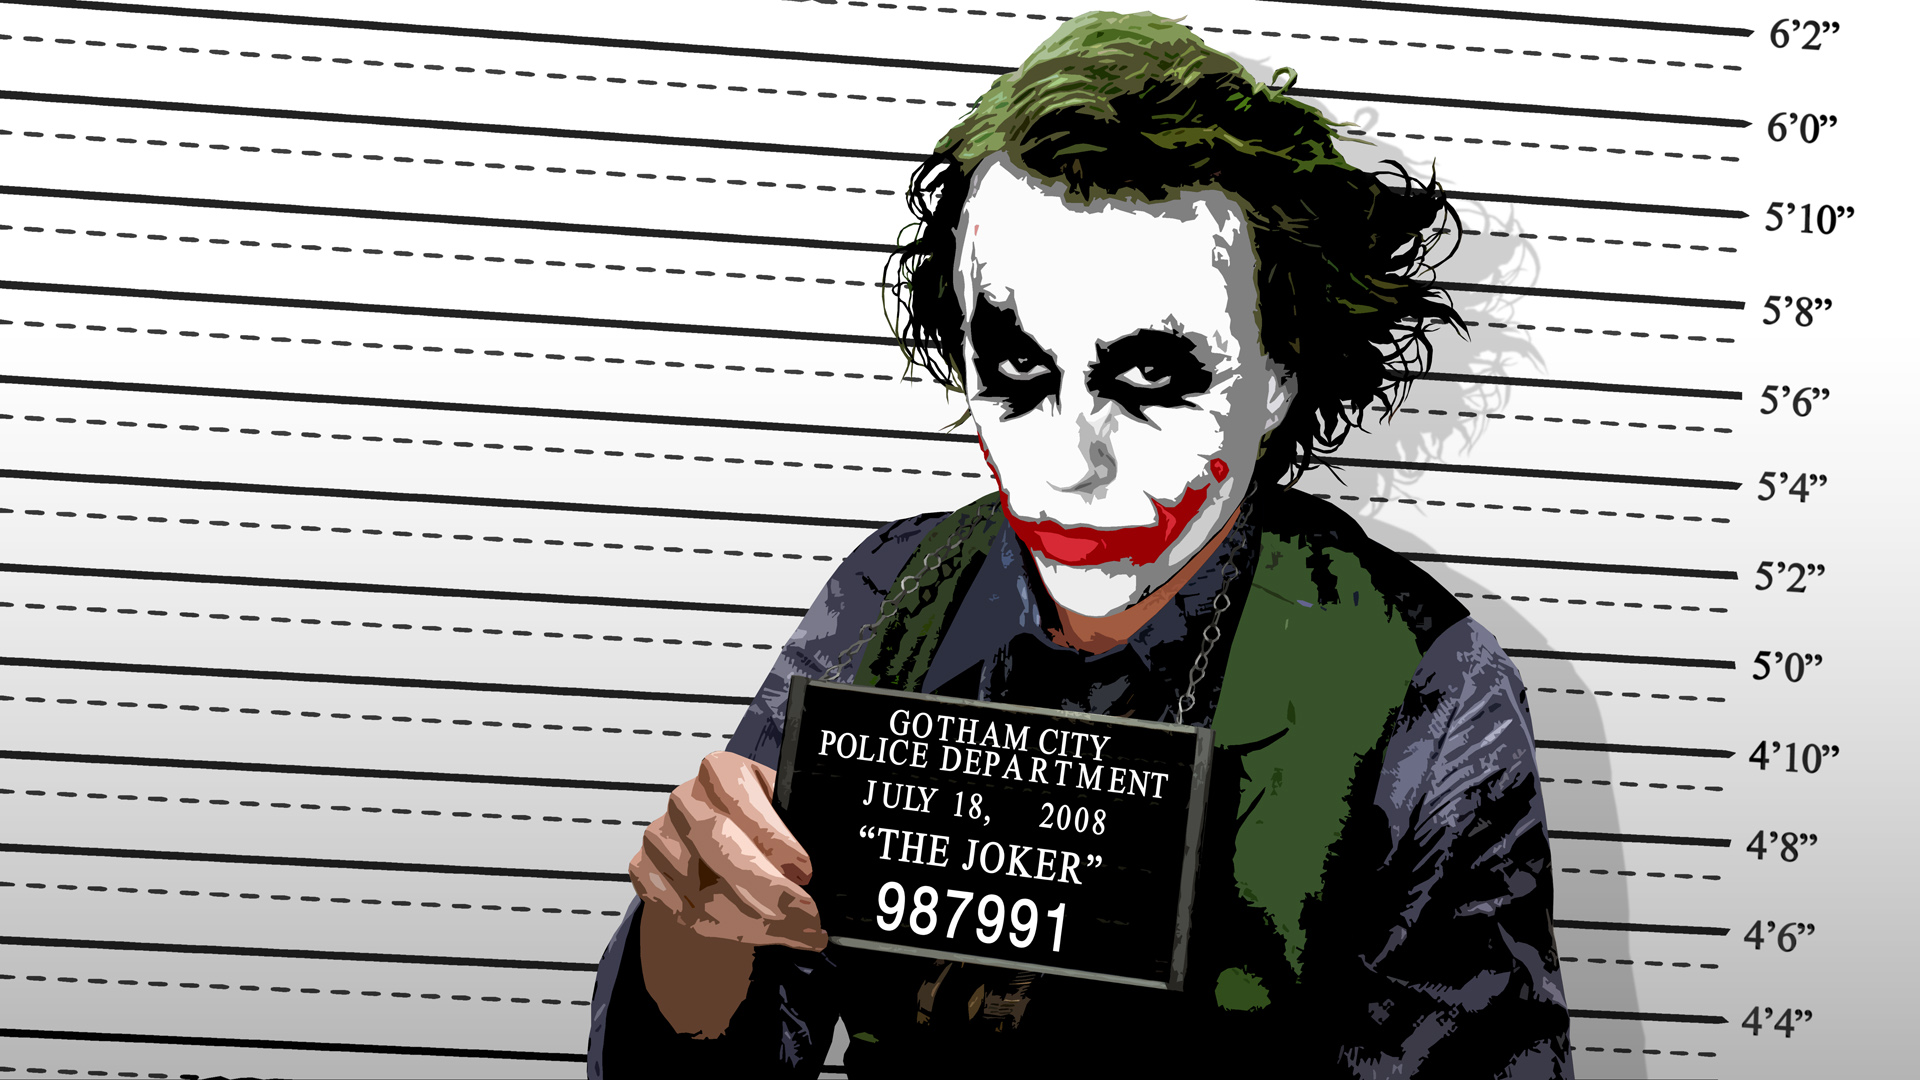 Batman, The Joker, police lineup, The Dark Knight - desktop wallpaper